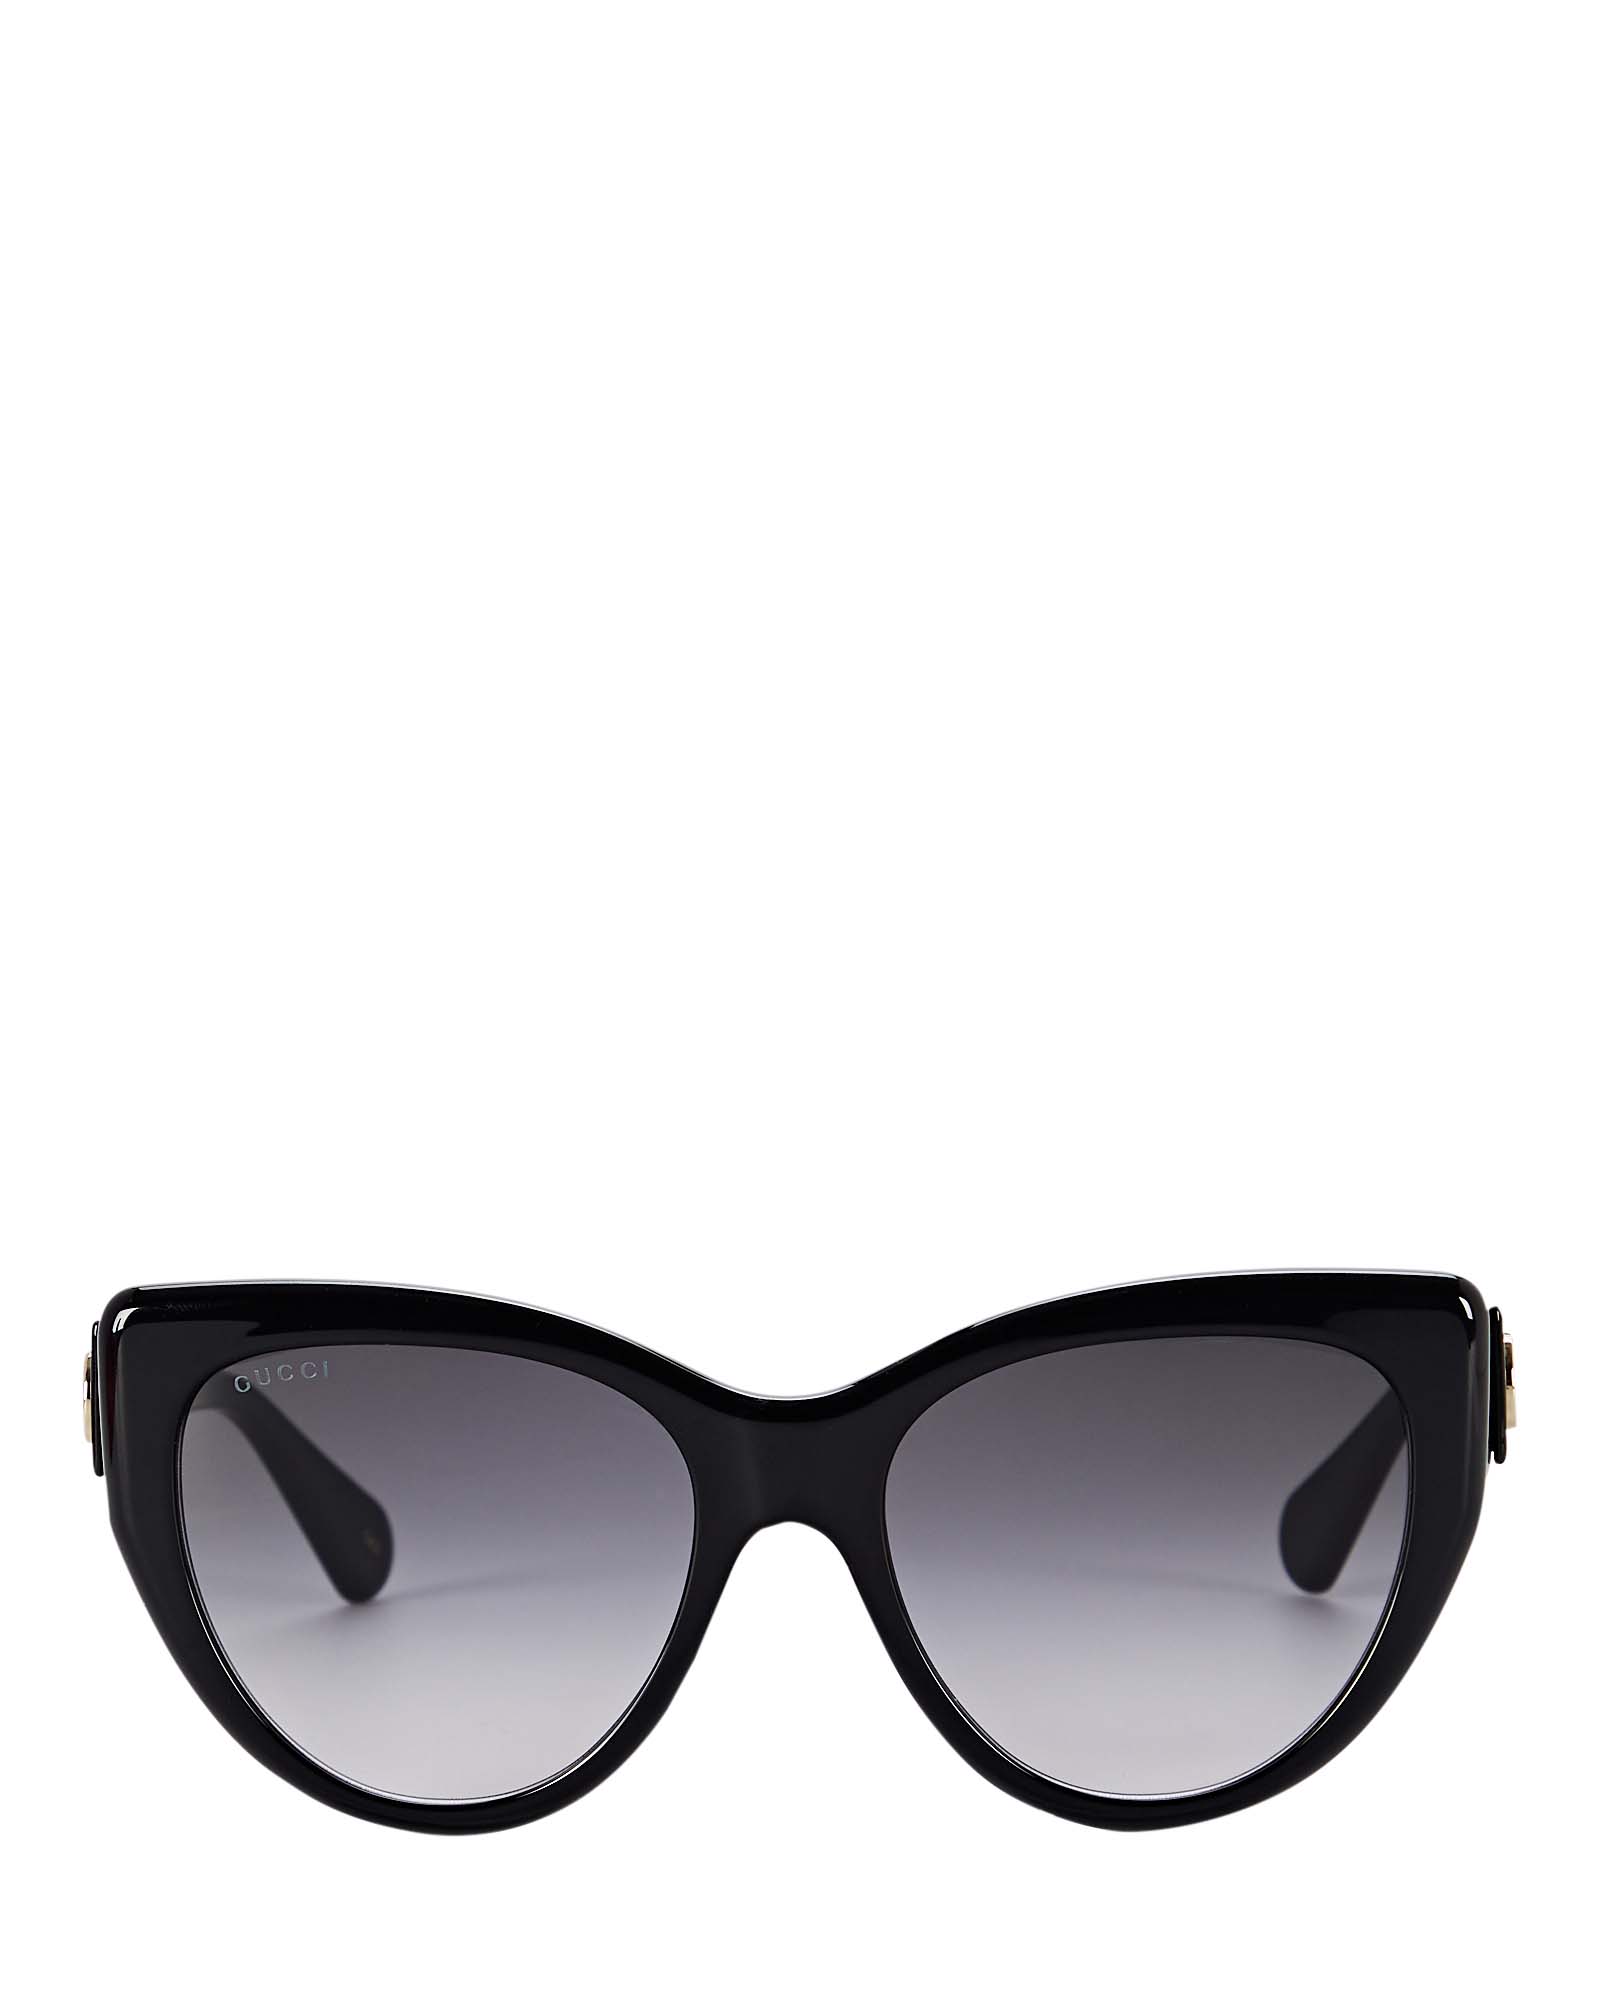 Gucci Oversized Feminine Cat Eye Sunglasses | INTERMIX®